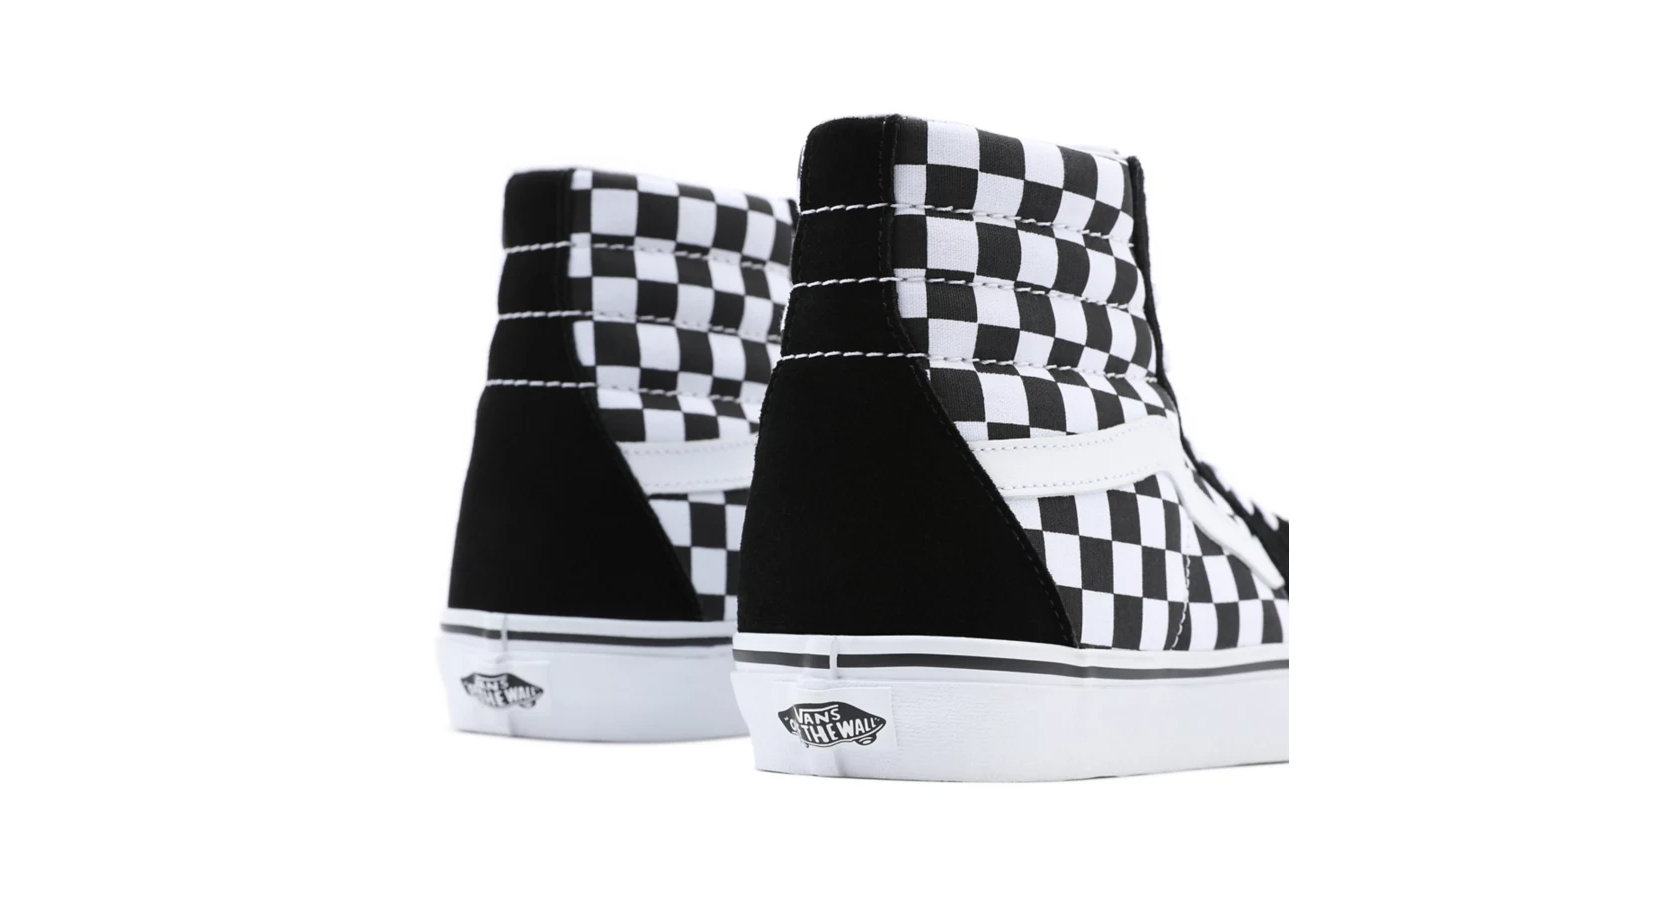 Vans Checkerboard SK8-HI Shoes Black/True White